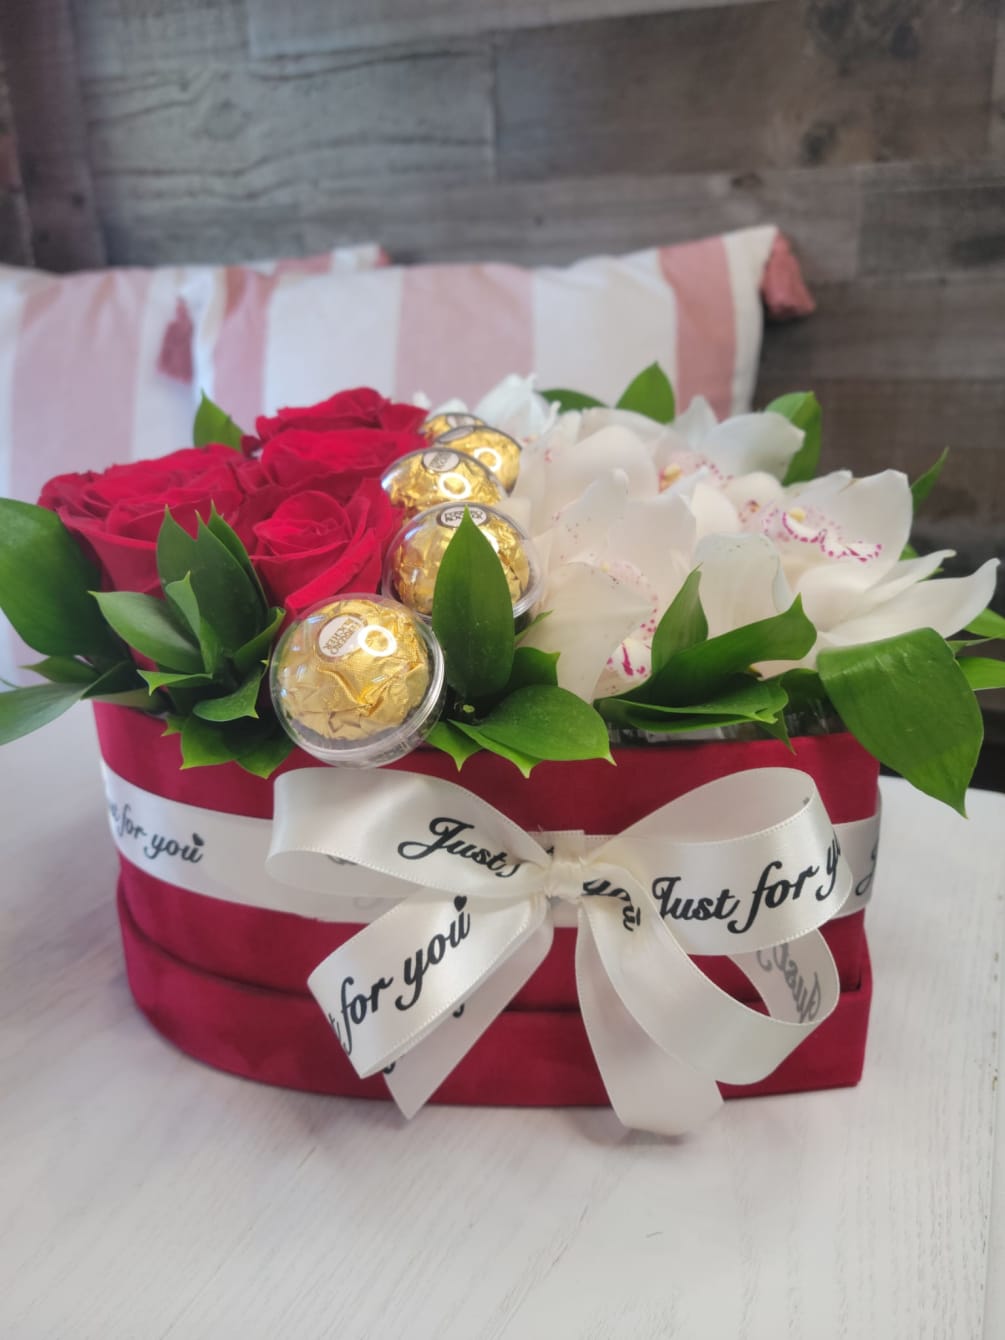 Medium Sized Heart Shape Box with Roses, Cymbidium Orchids and Chocolates. The